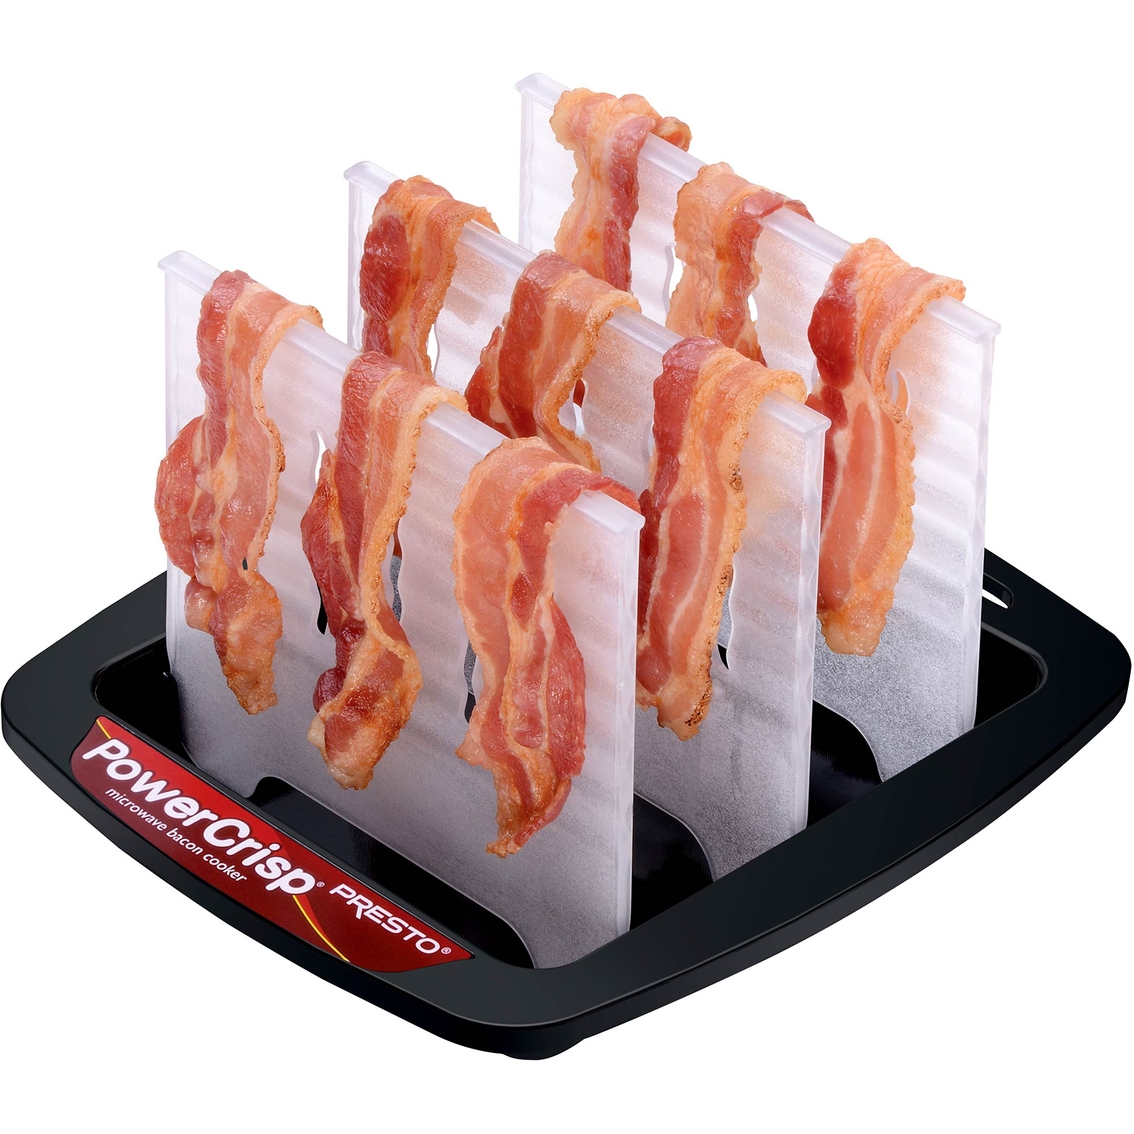 Presto PowerCrisp Microwave Bacon Cooker - Image 3 of 3